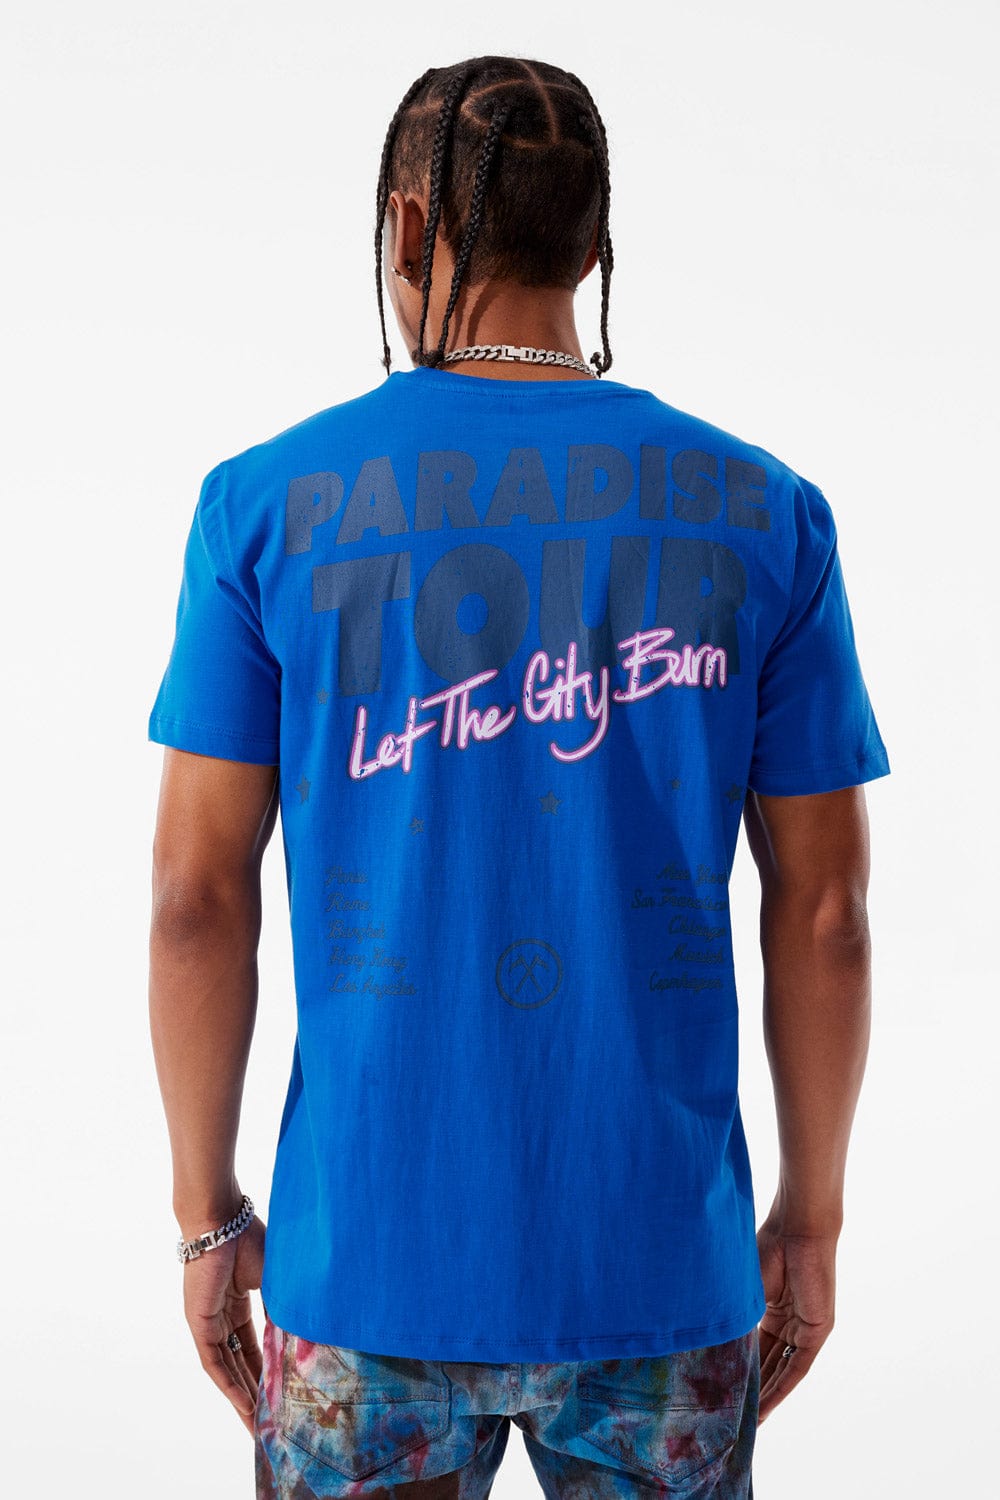 Jordan Craig Paradise Tour T-Shirt